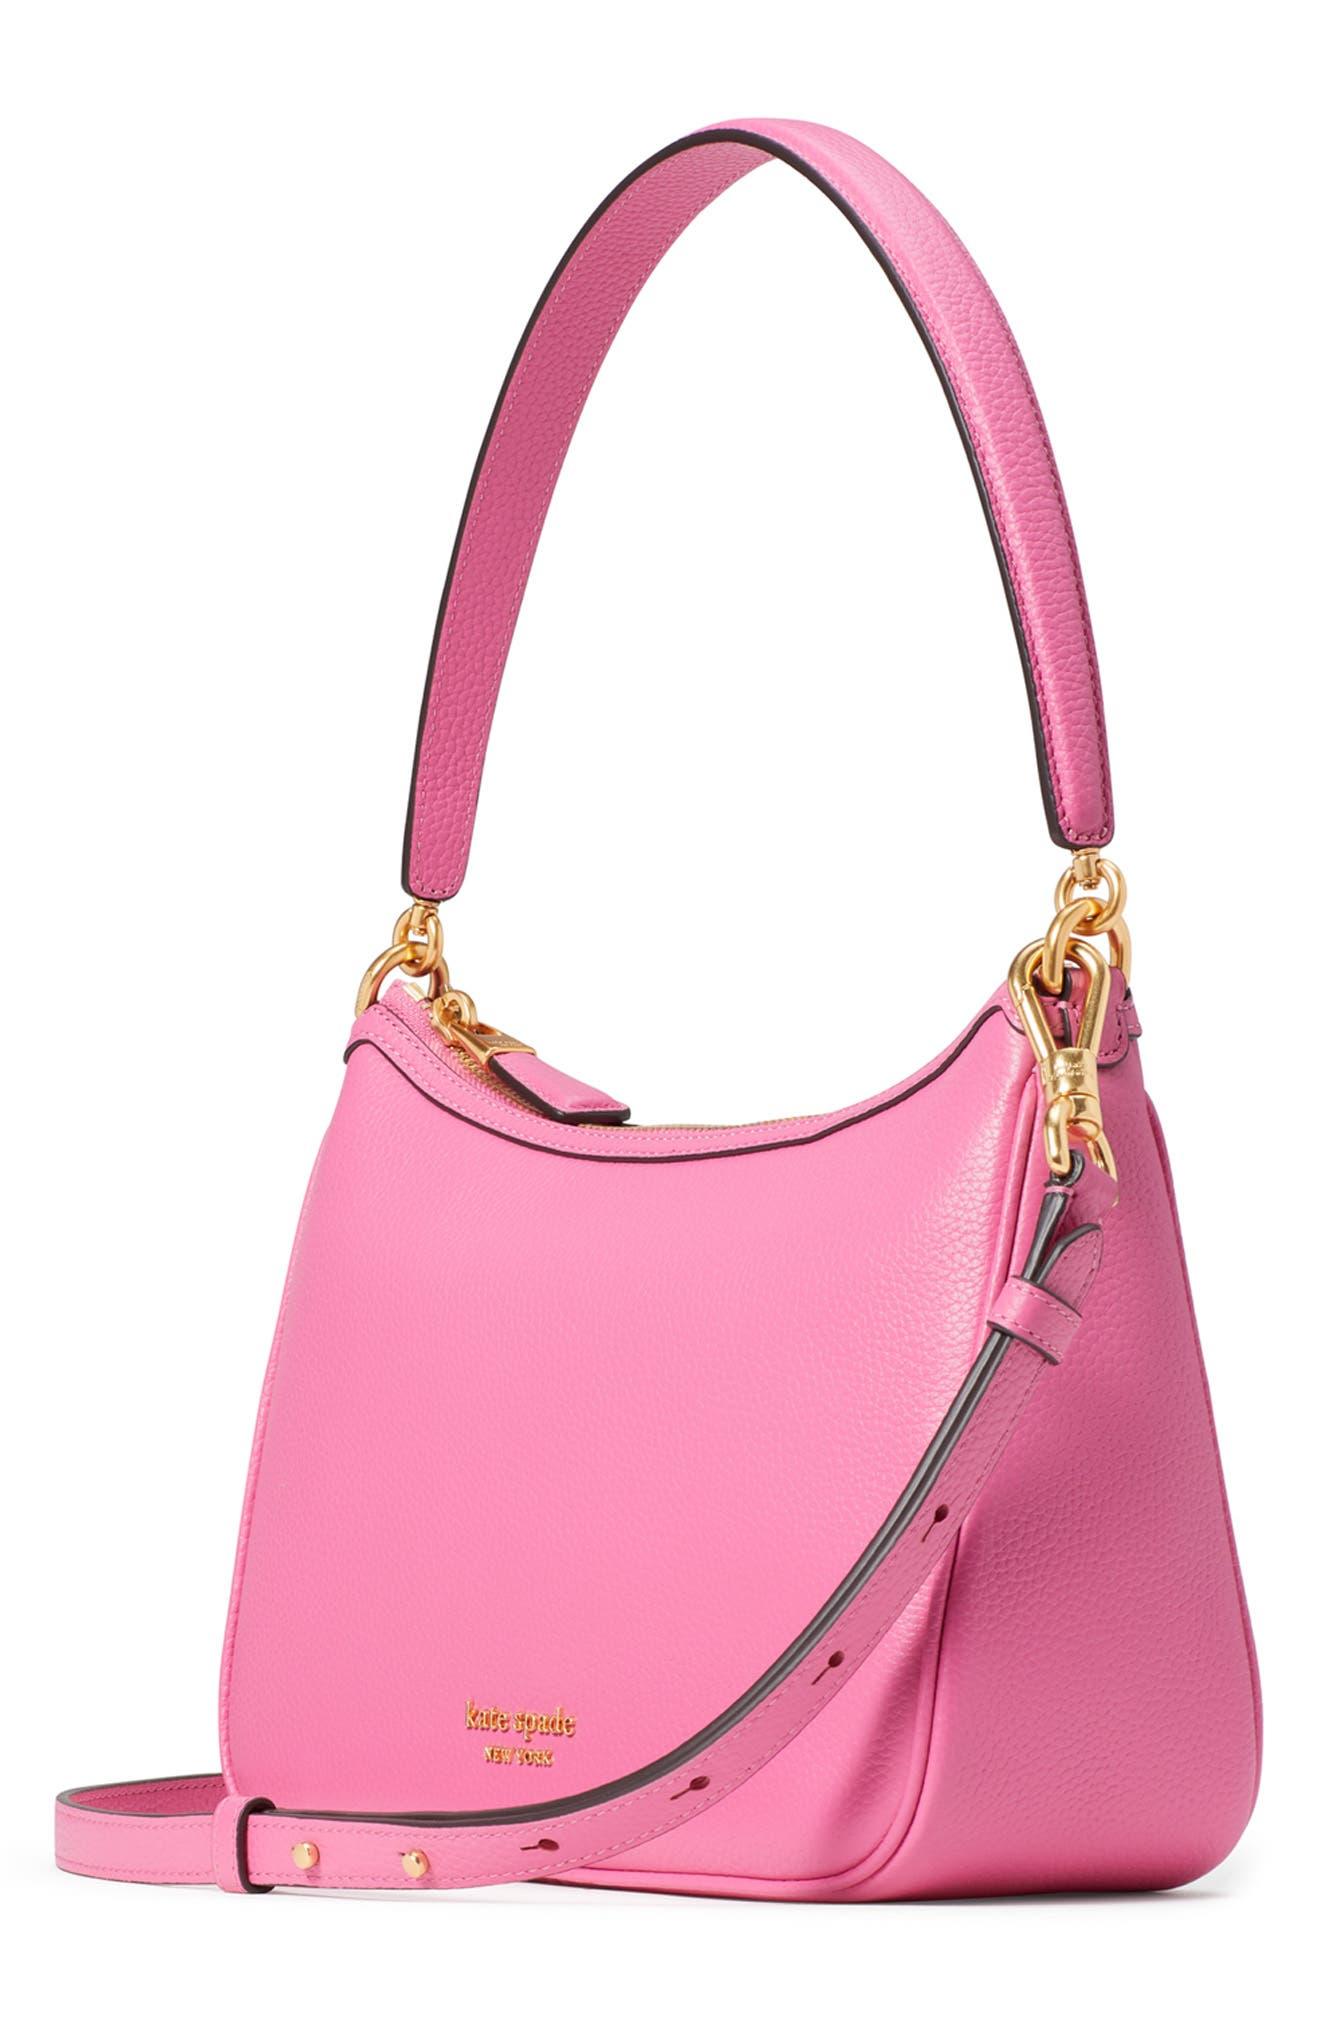 Kate Spade Small Sam Pebble Leather Shoulder Bag in Pink